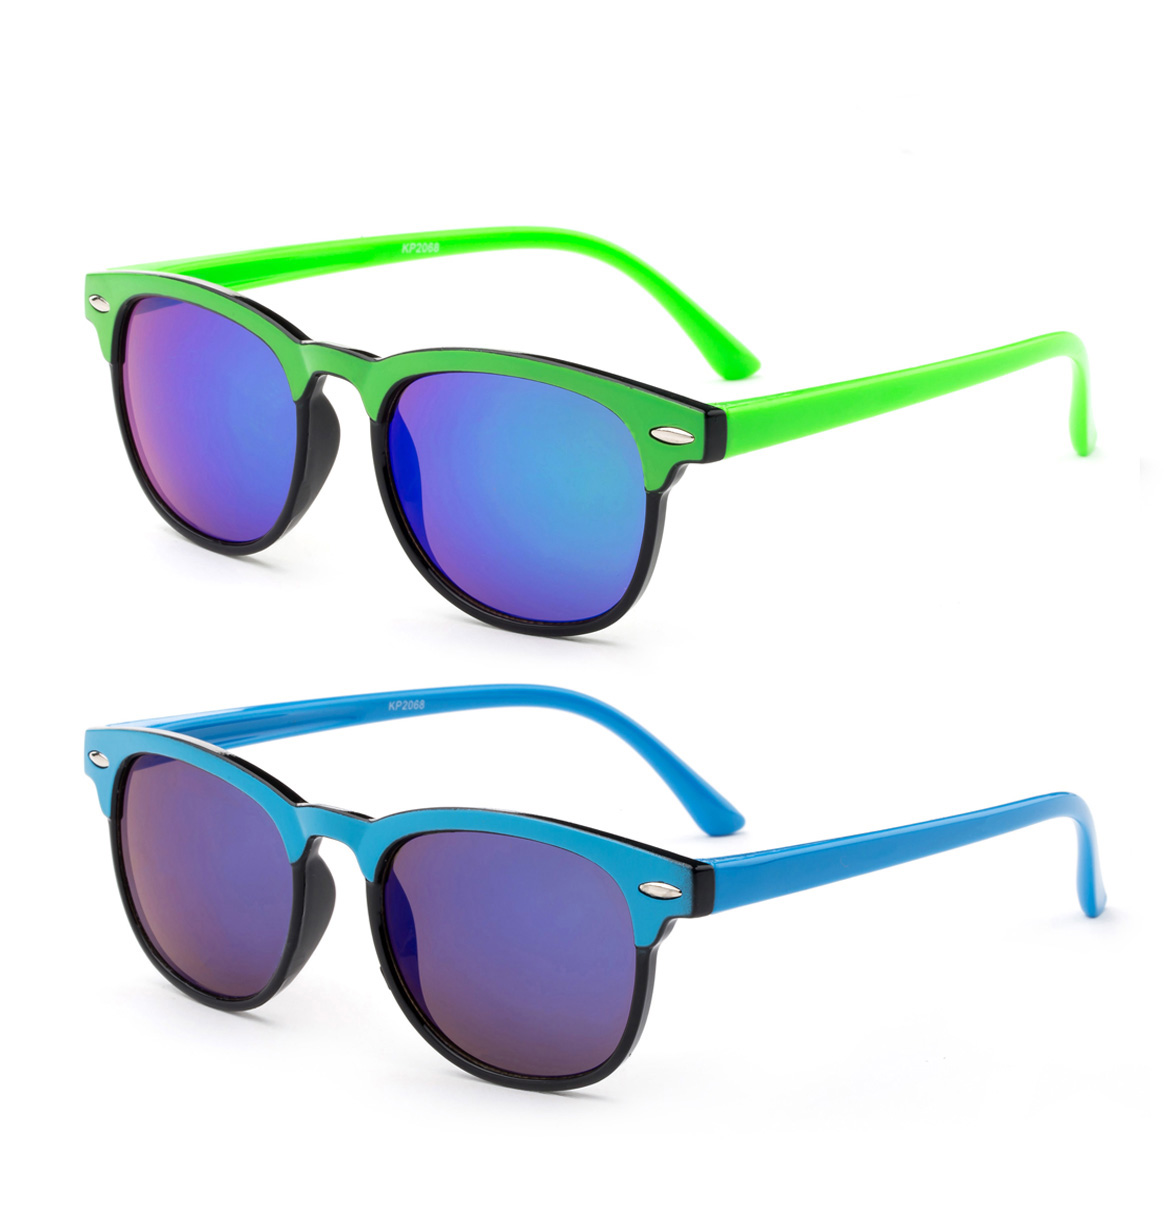 2 Pairs Newbee Fashion-Kyra Kids Two Tone Vintage Style Sunglasses Flash Mirror Lens Girls Boys Sunglasses UV Protection - image 1 of 1